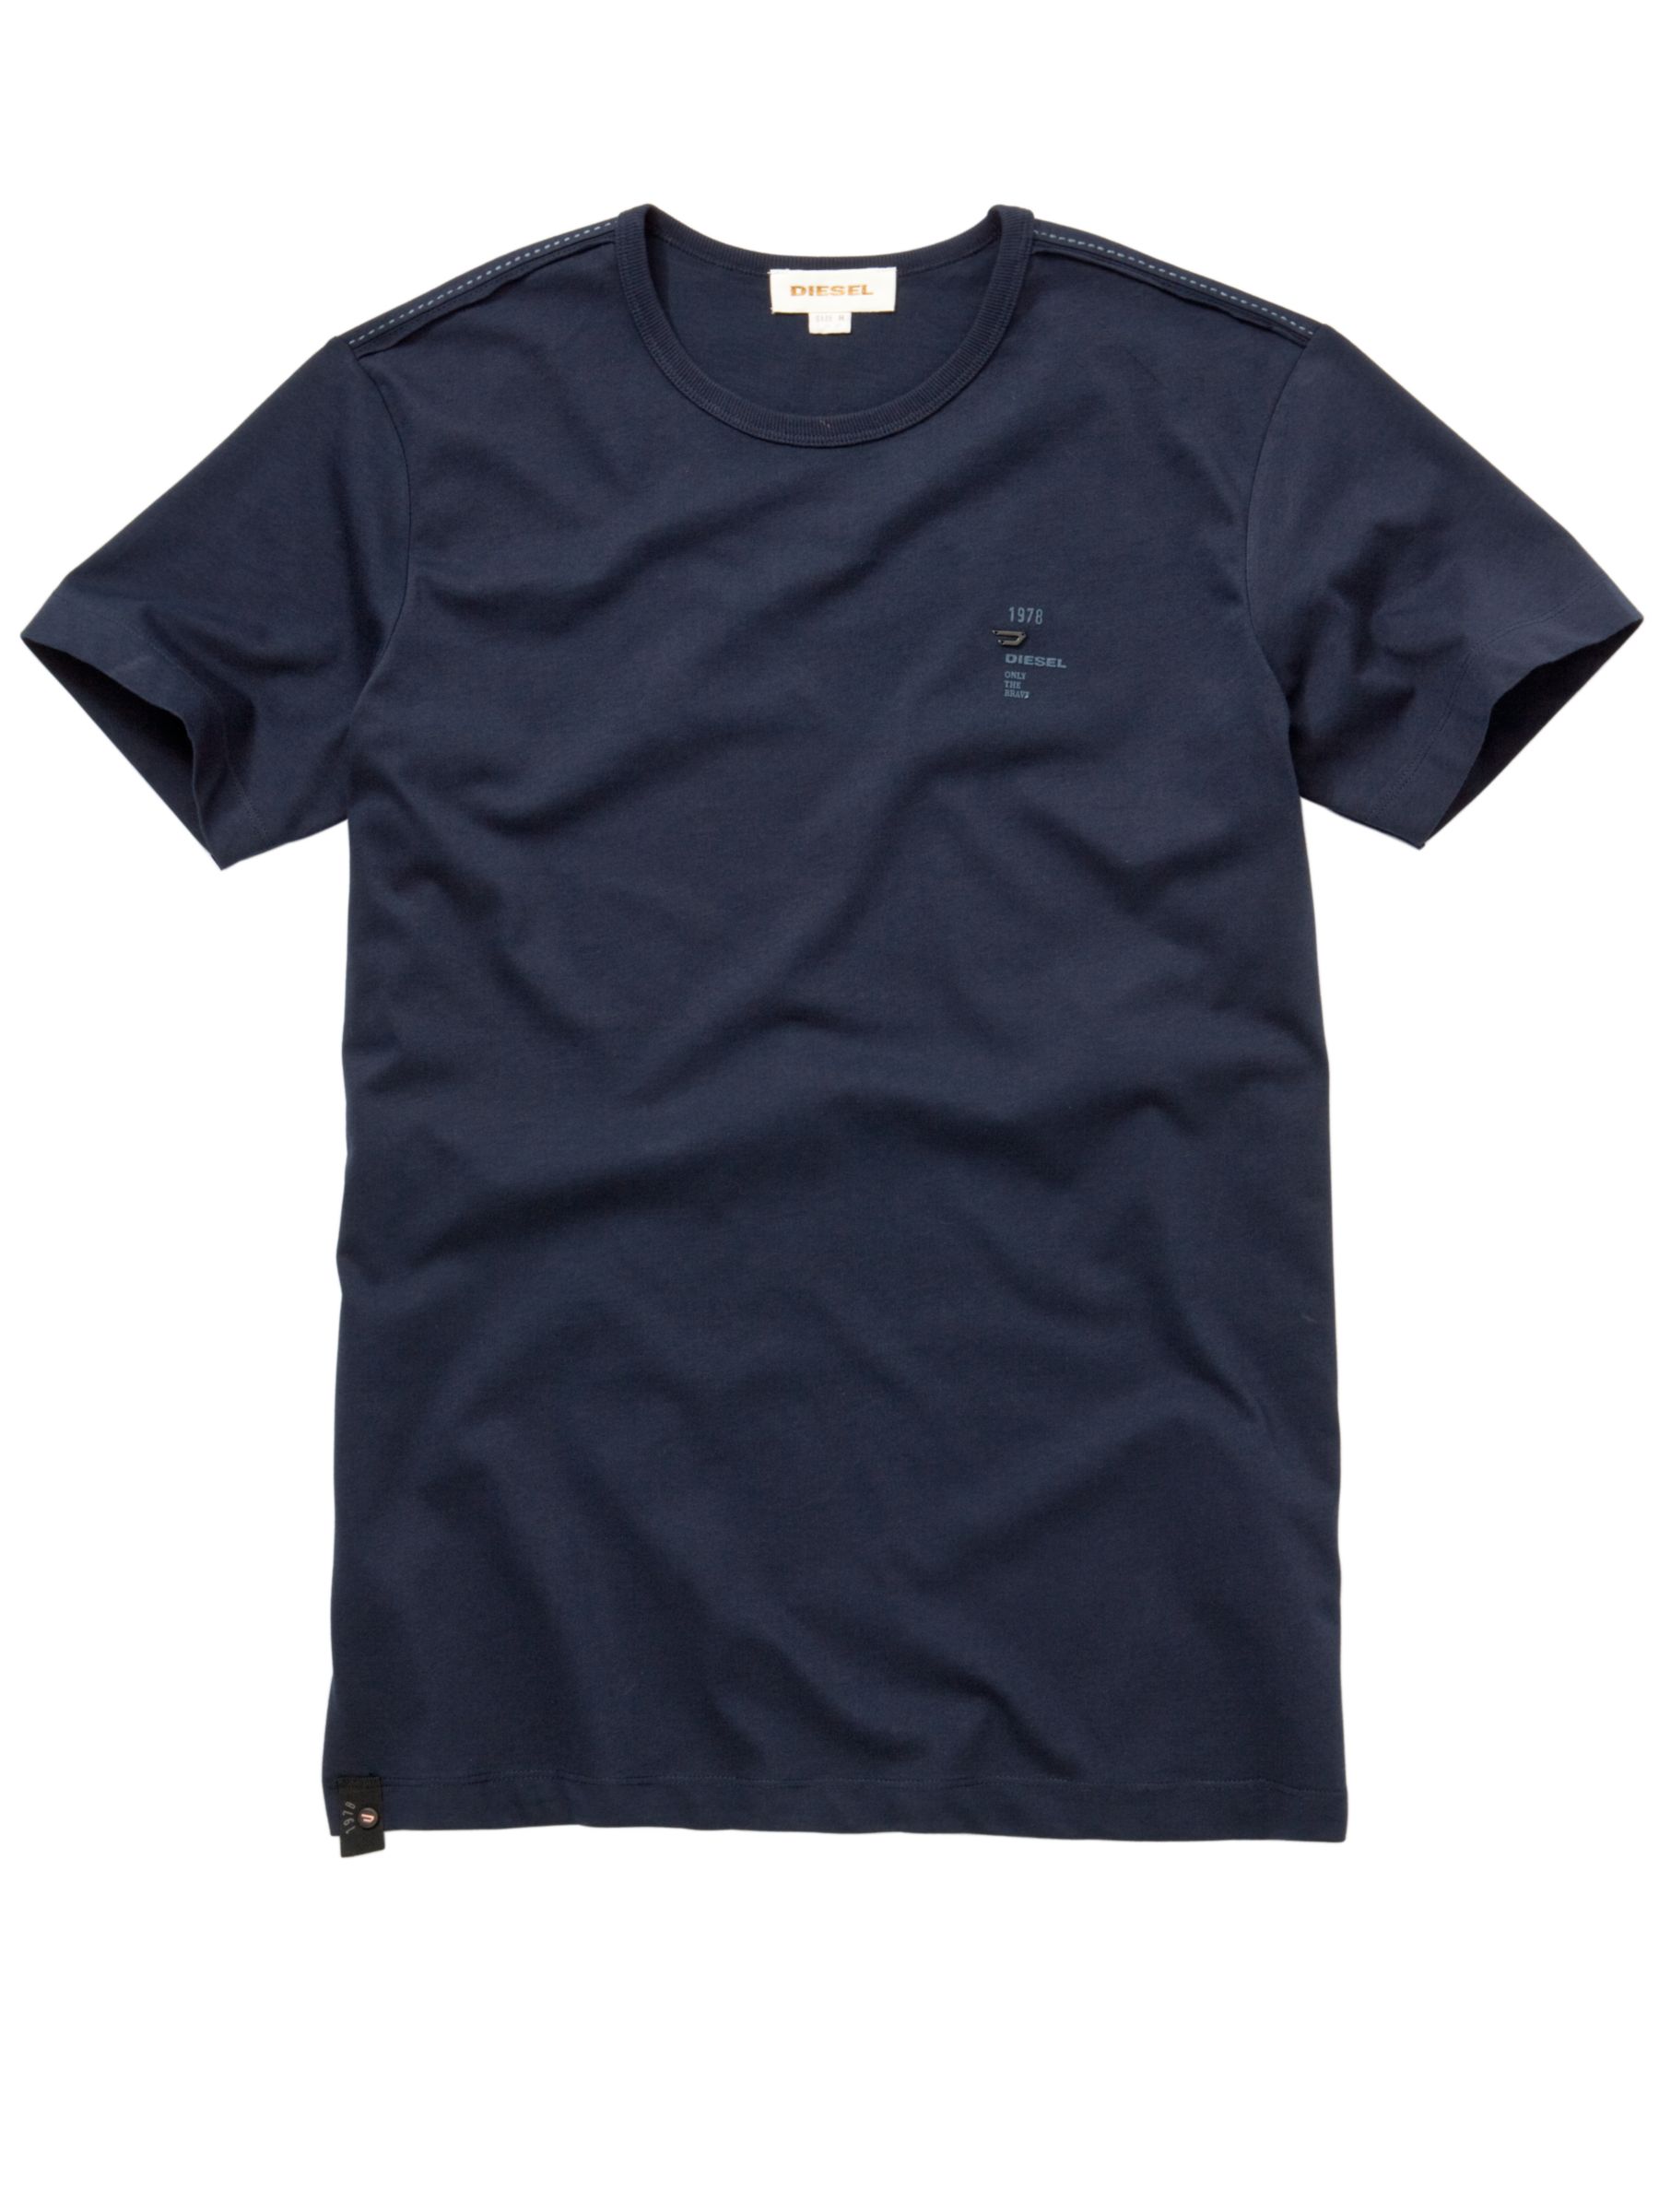 T-Calor Basic Short-Sleeve T-Shirt, Navy